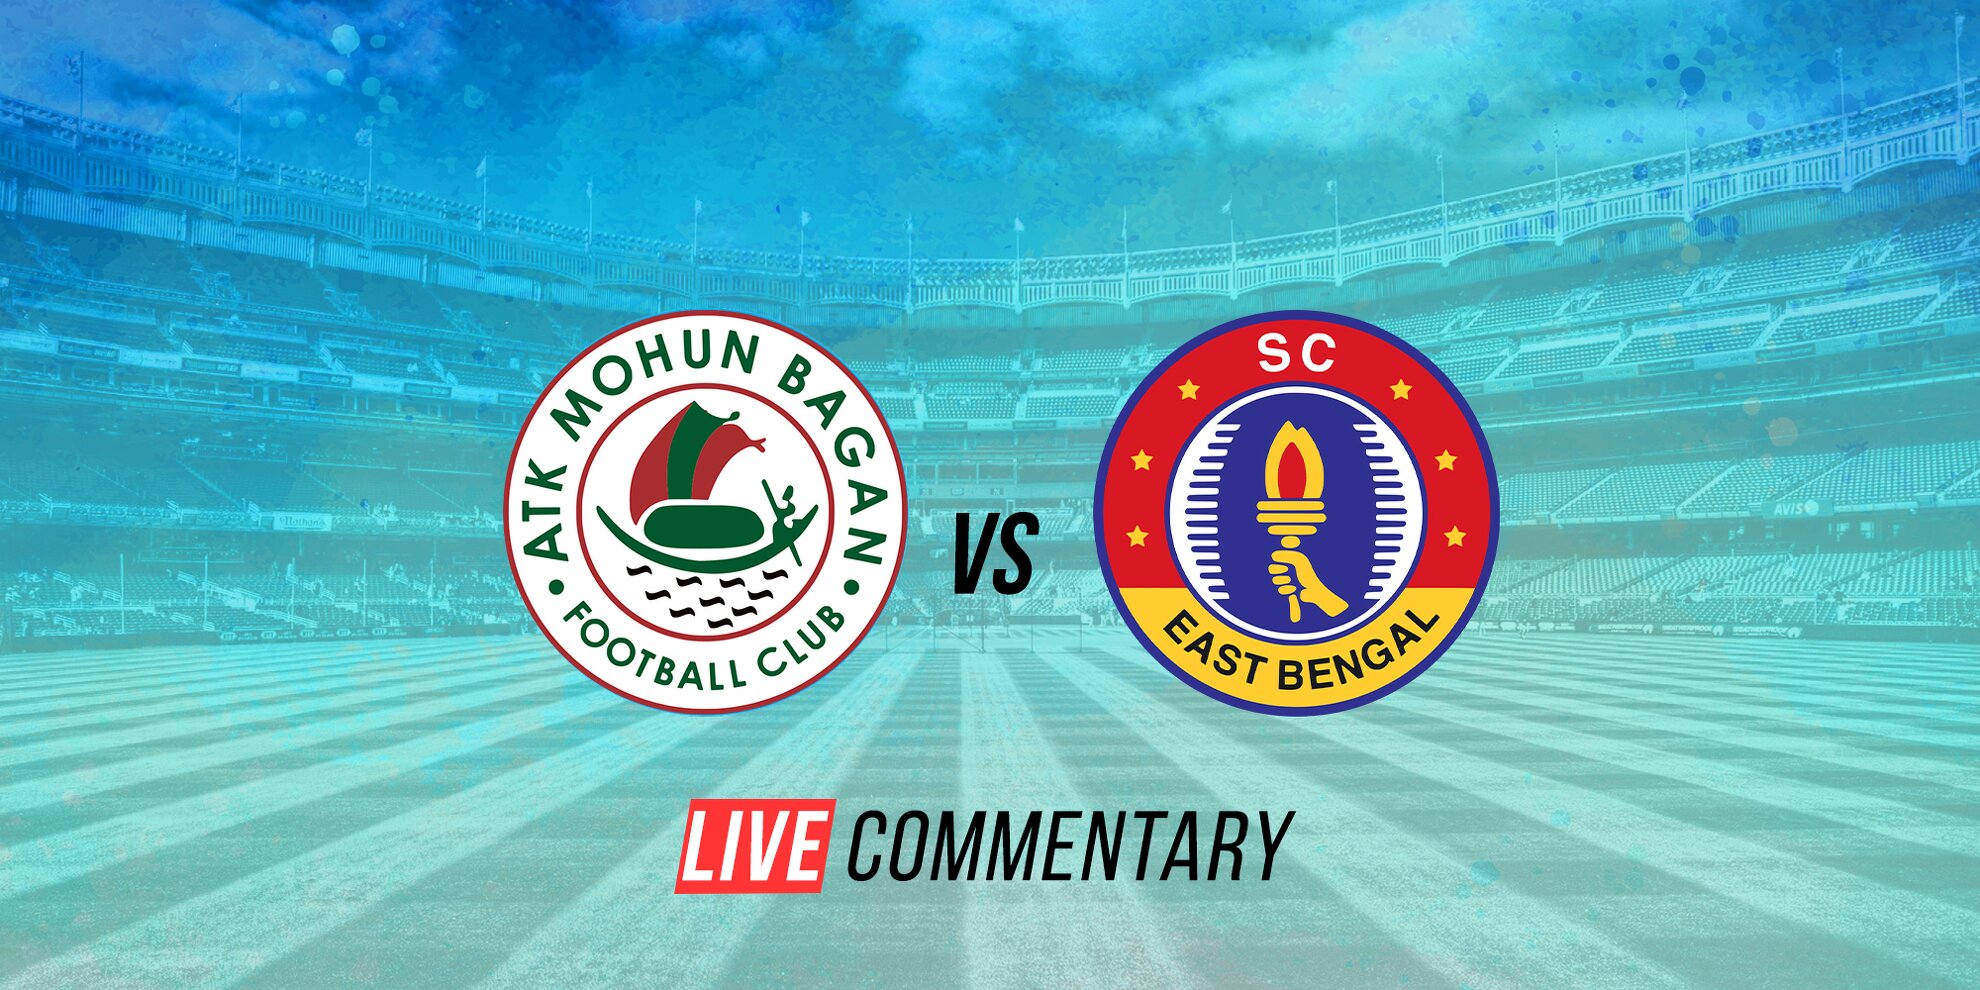 ATK Mohun Bagan VS SC East Bengal Live Commentary